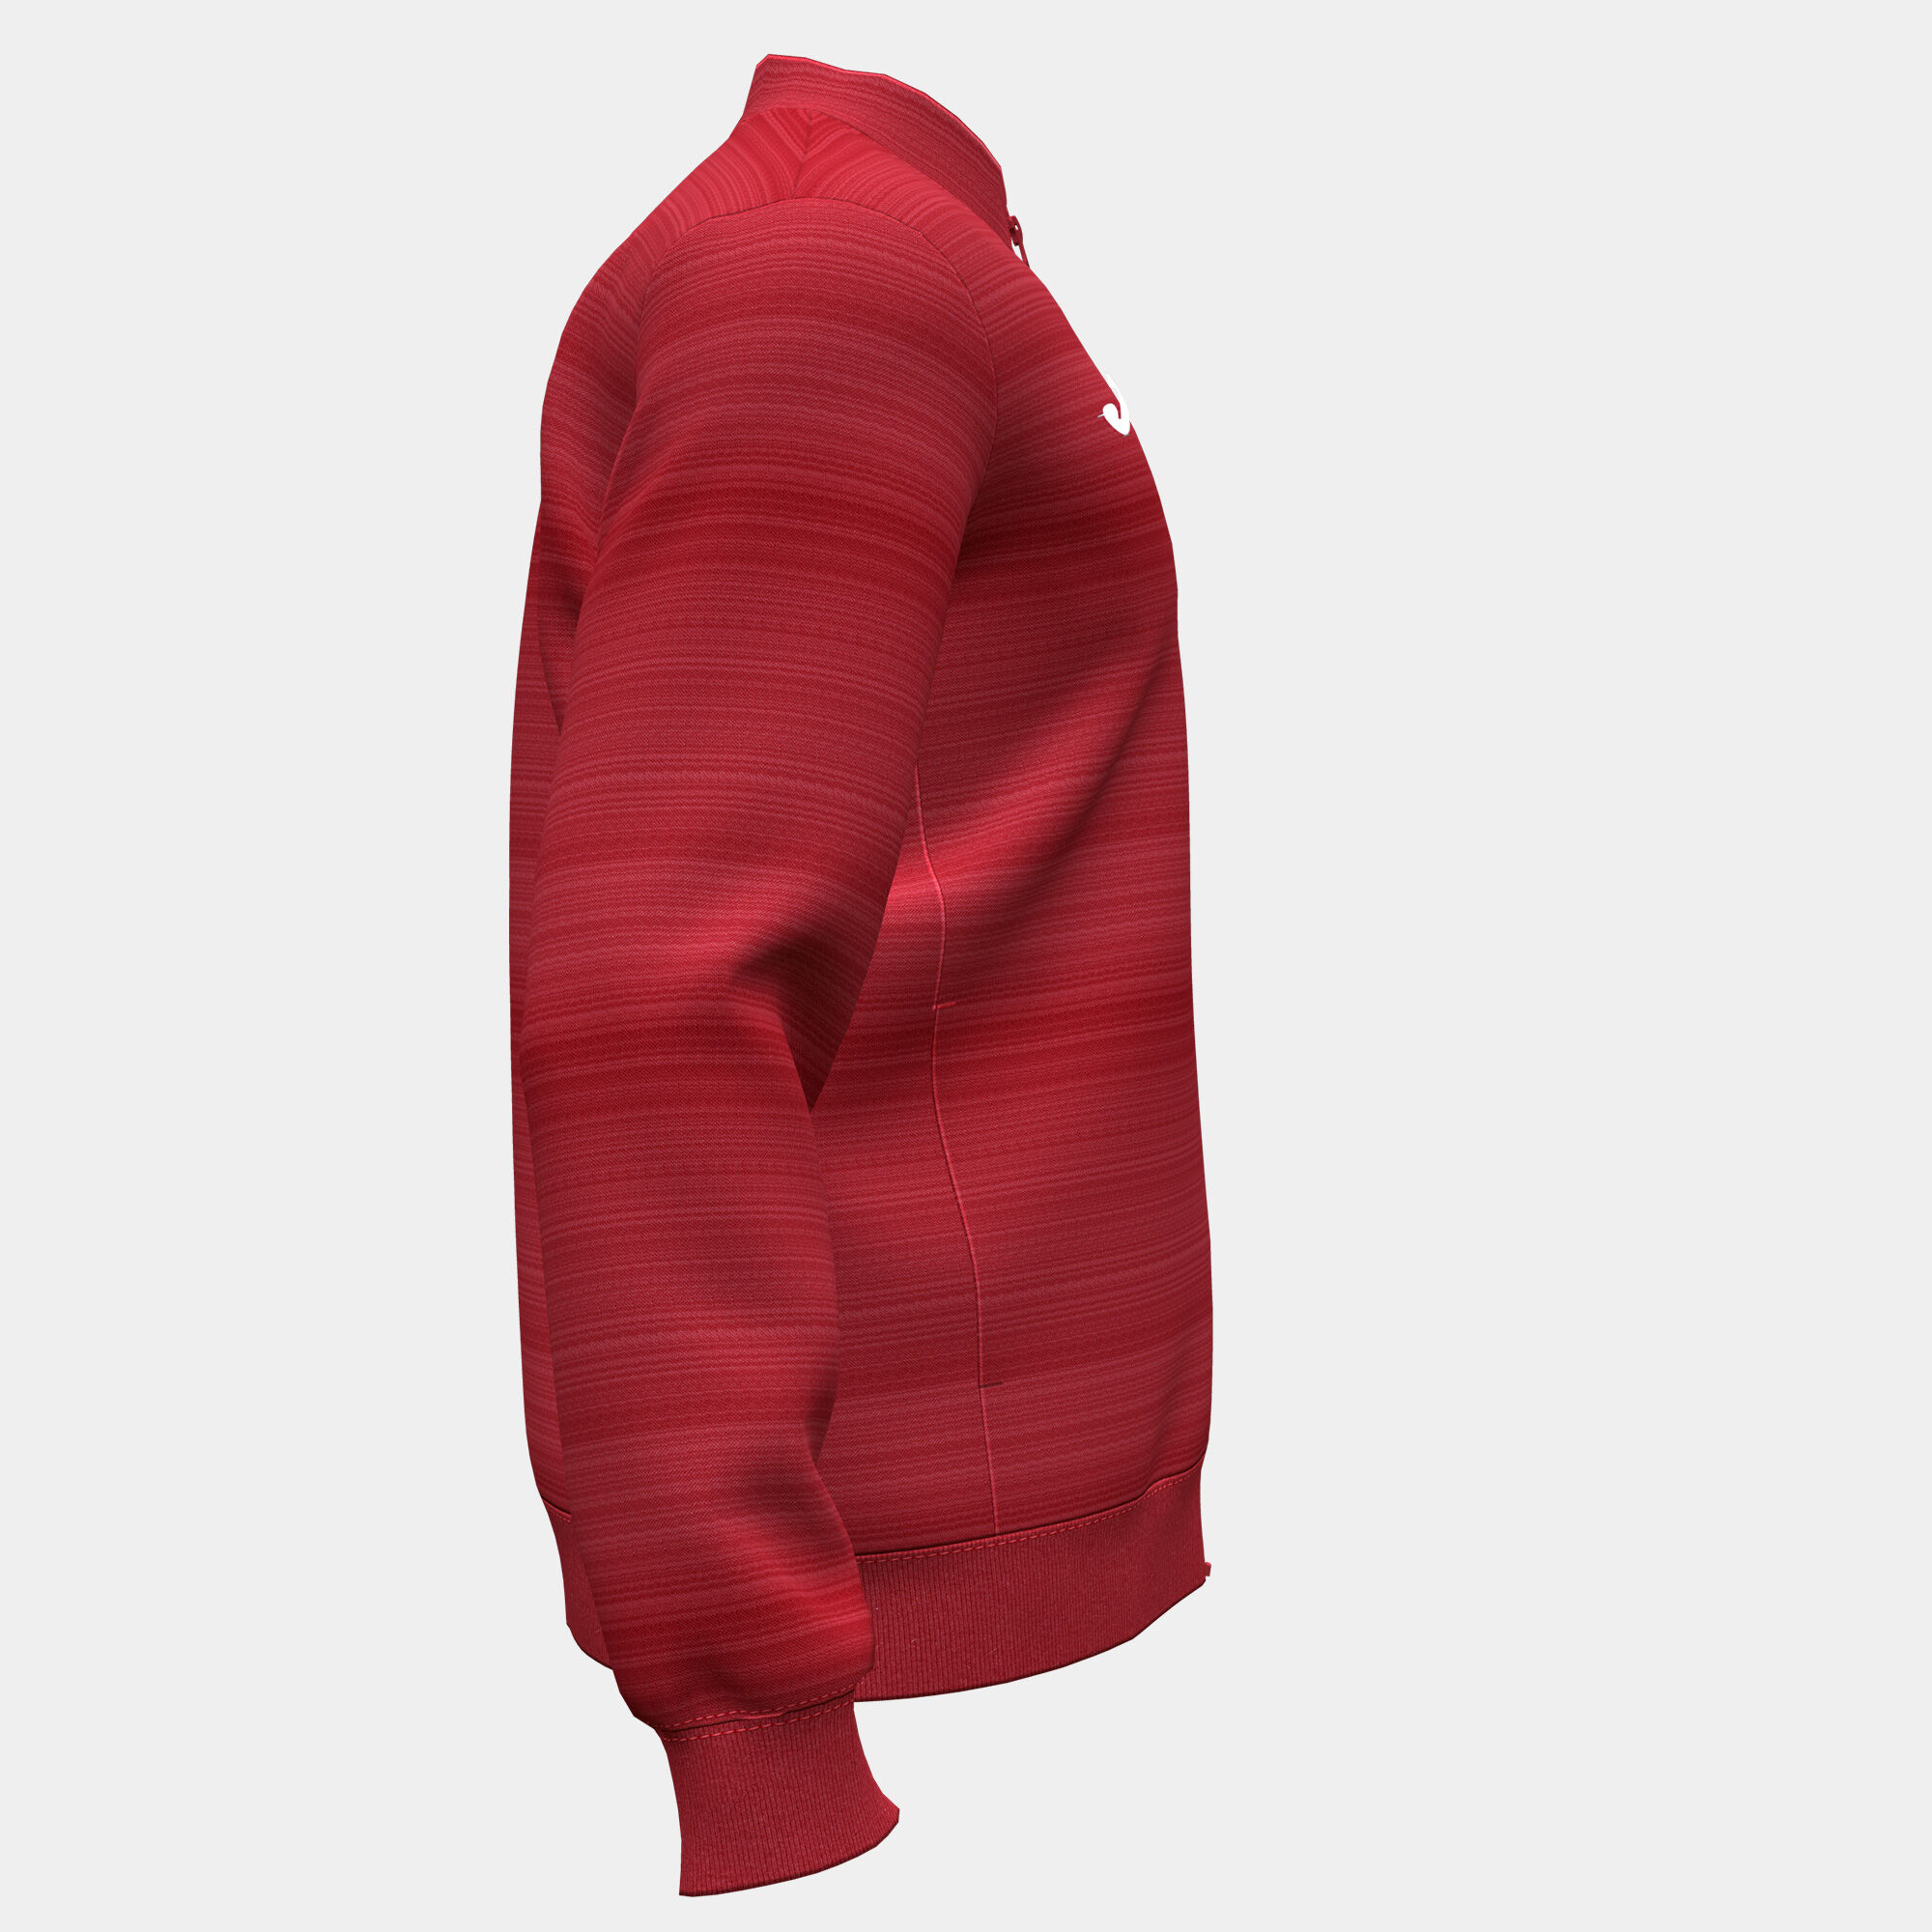 Jacket man Grafity III red